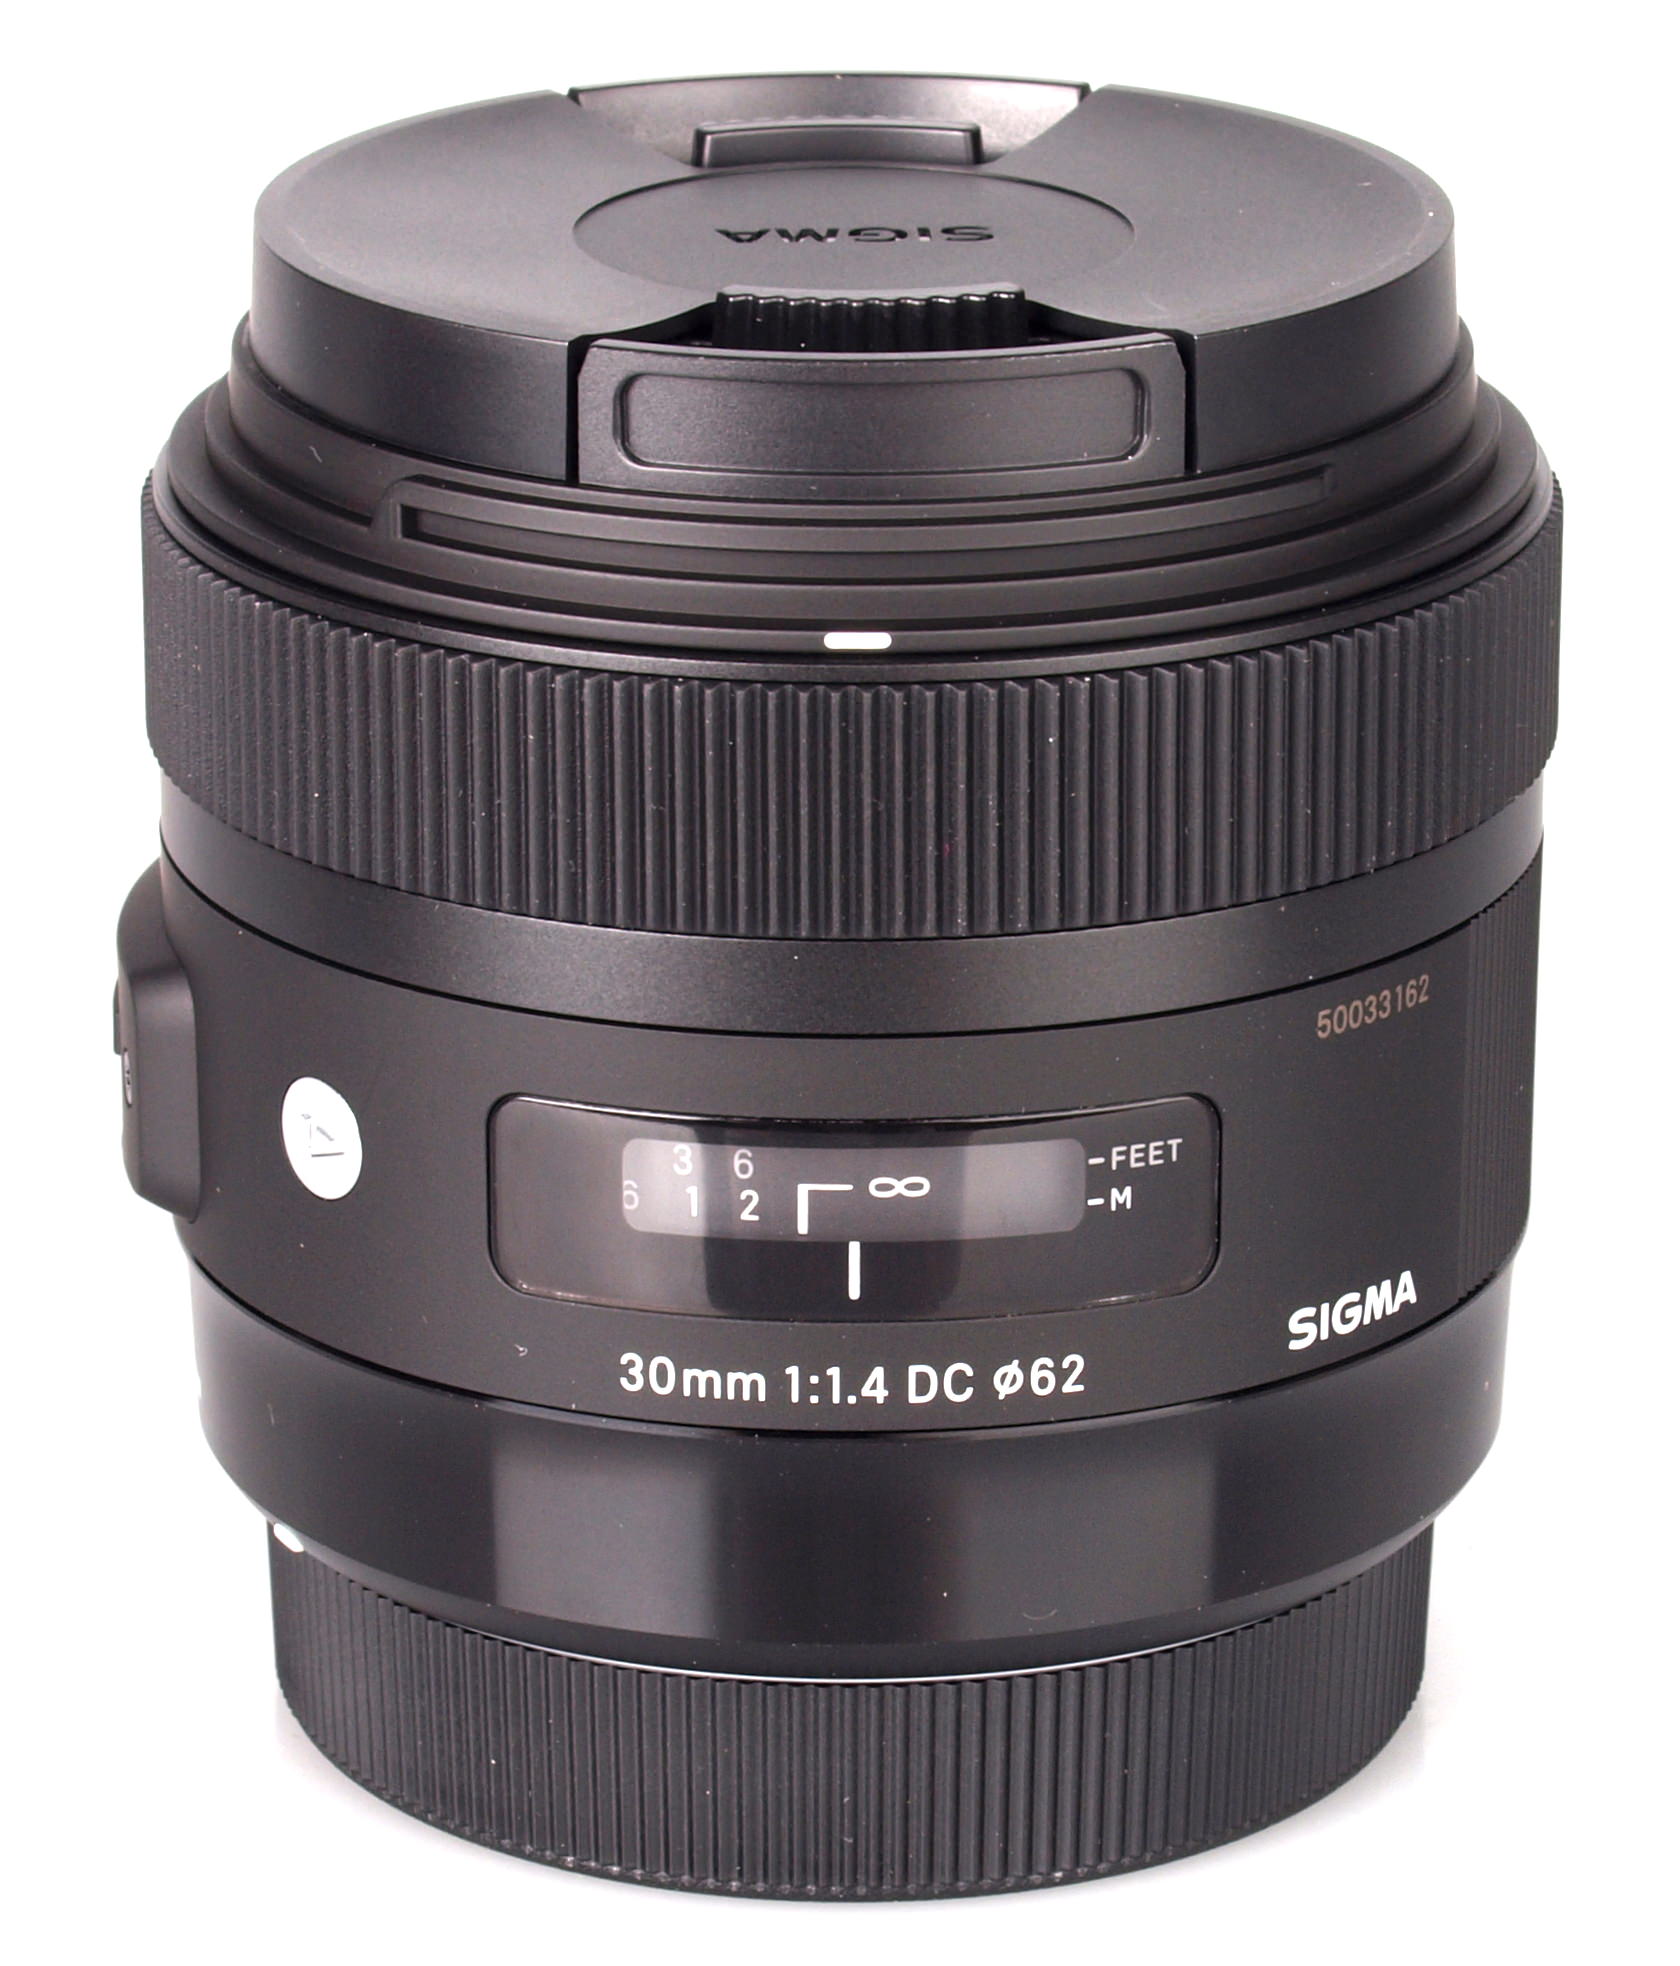 Sigma 30mm f/1.4 DC HSM A Lens Review